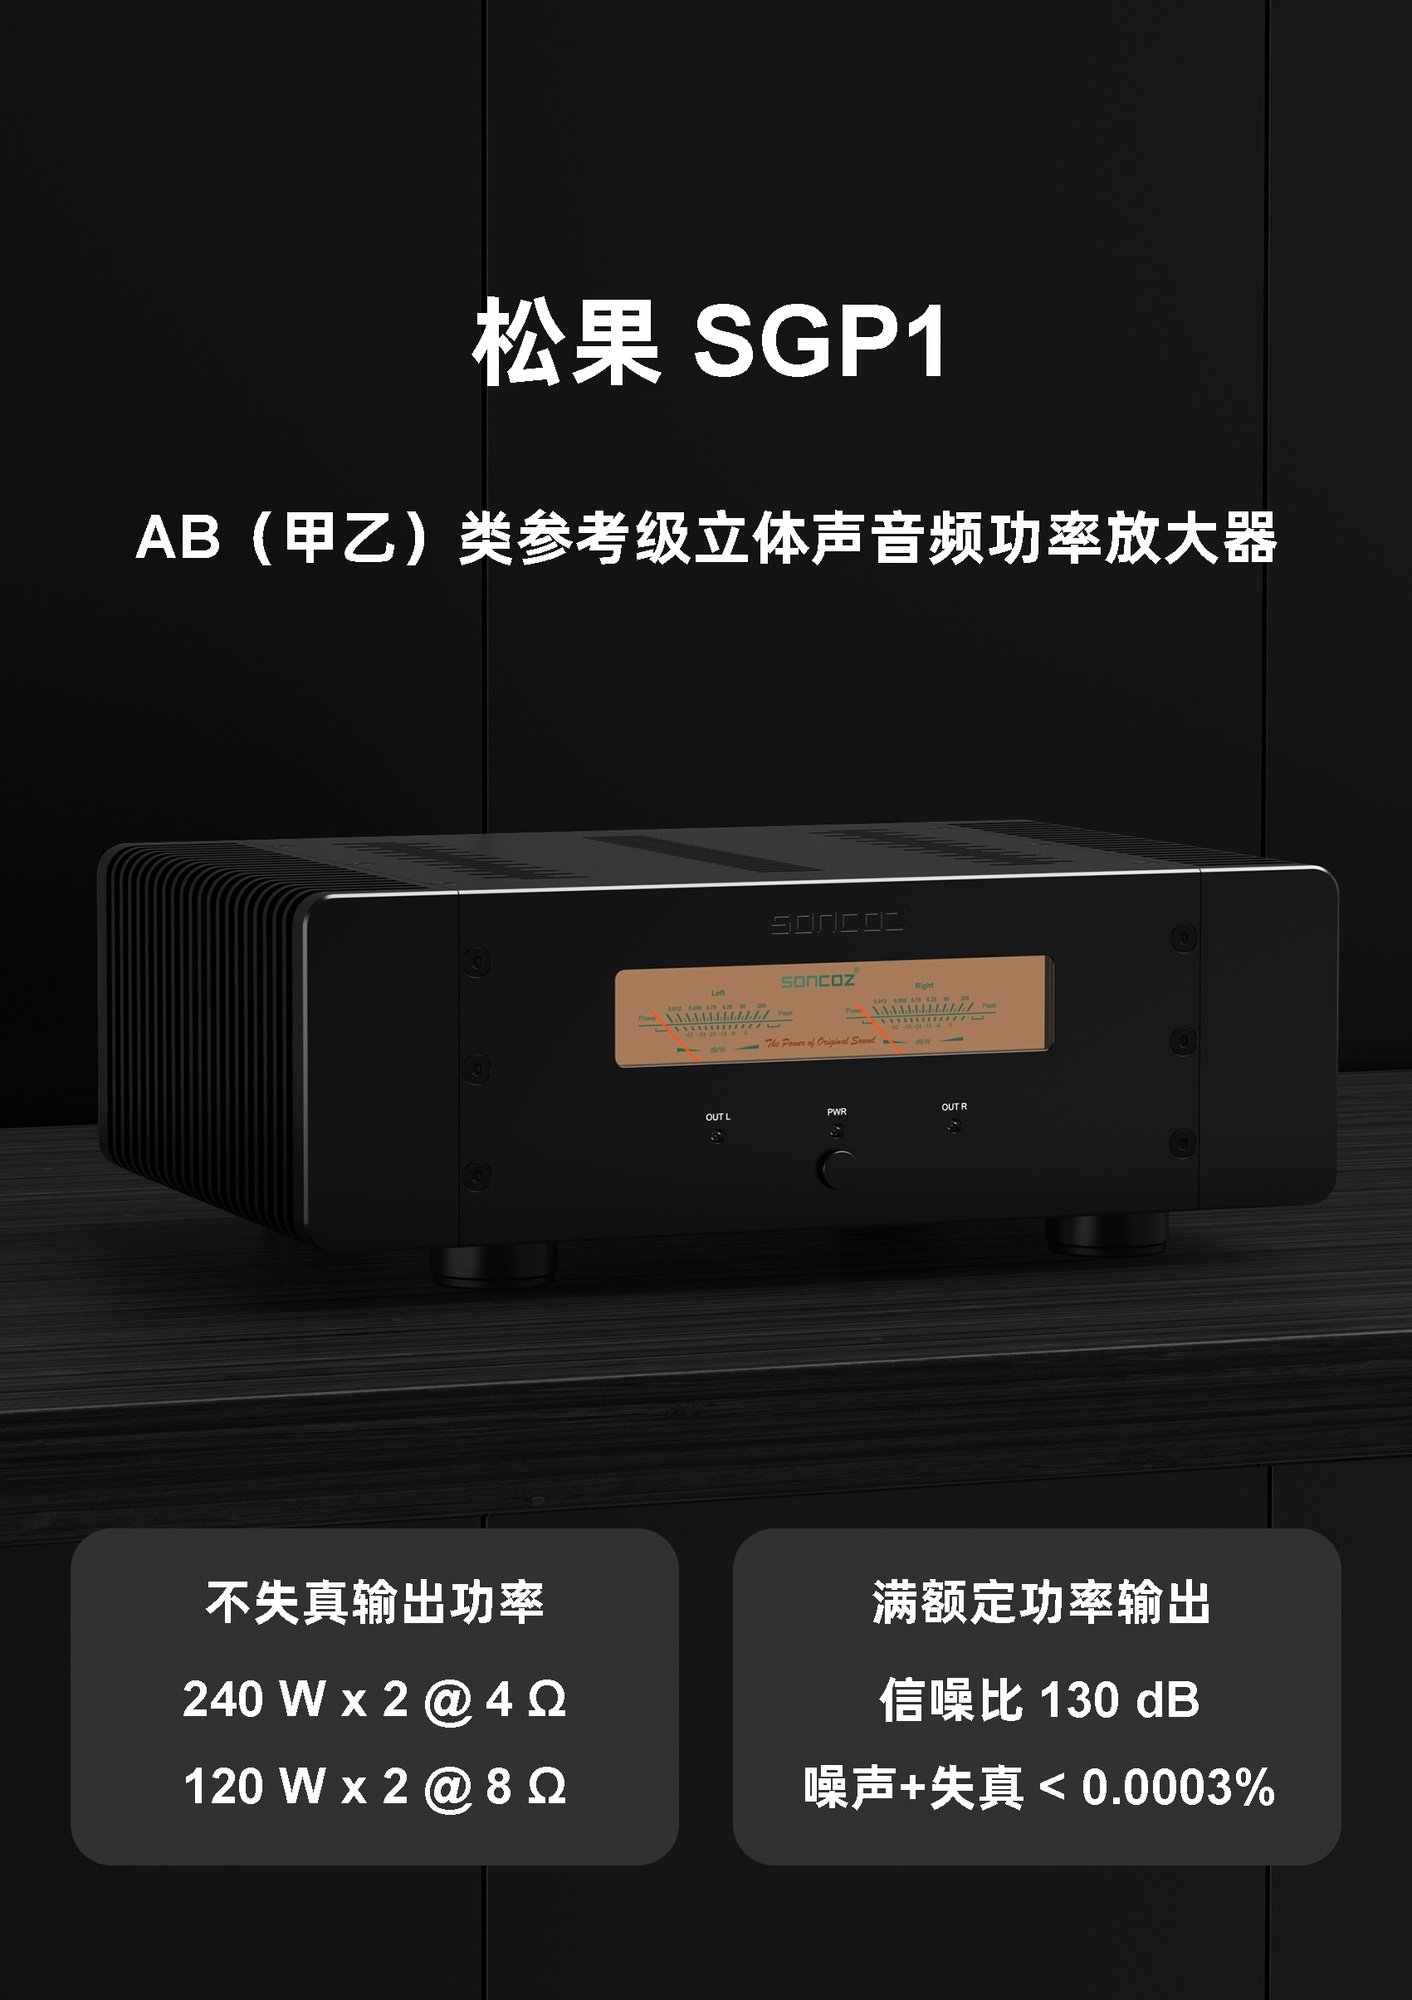 SGP1--甲乙类参考级立体声音频功率放大器- 松果SONCOZ（中国）